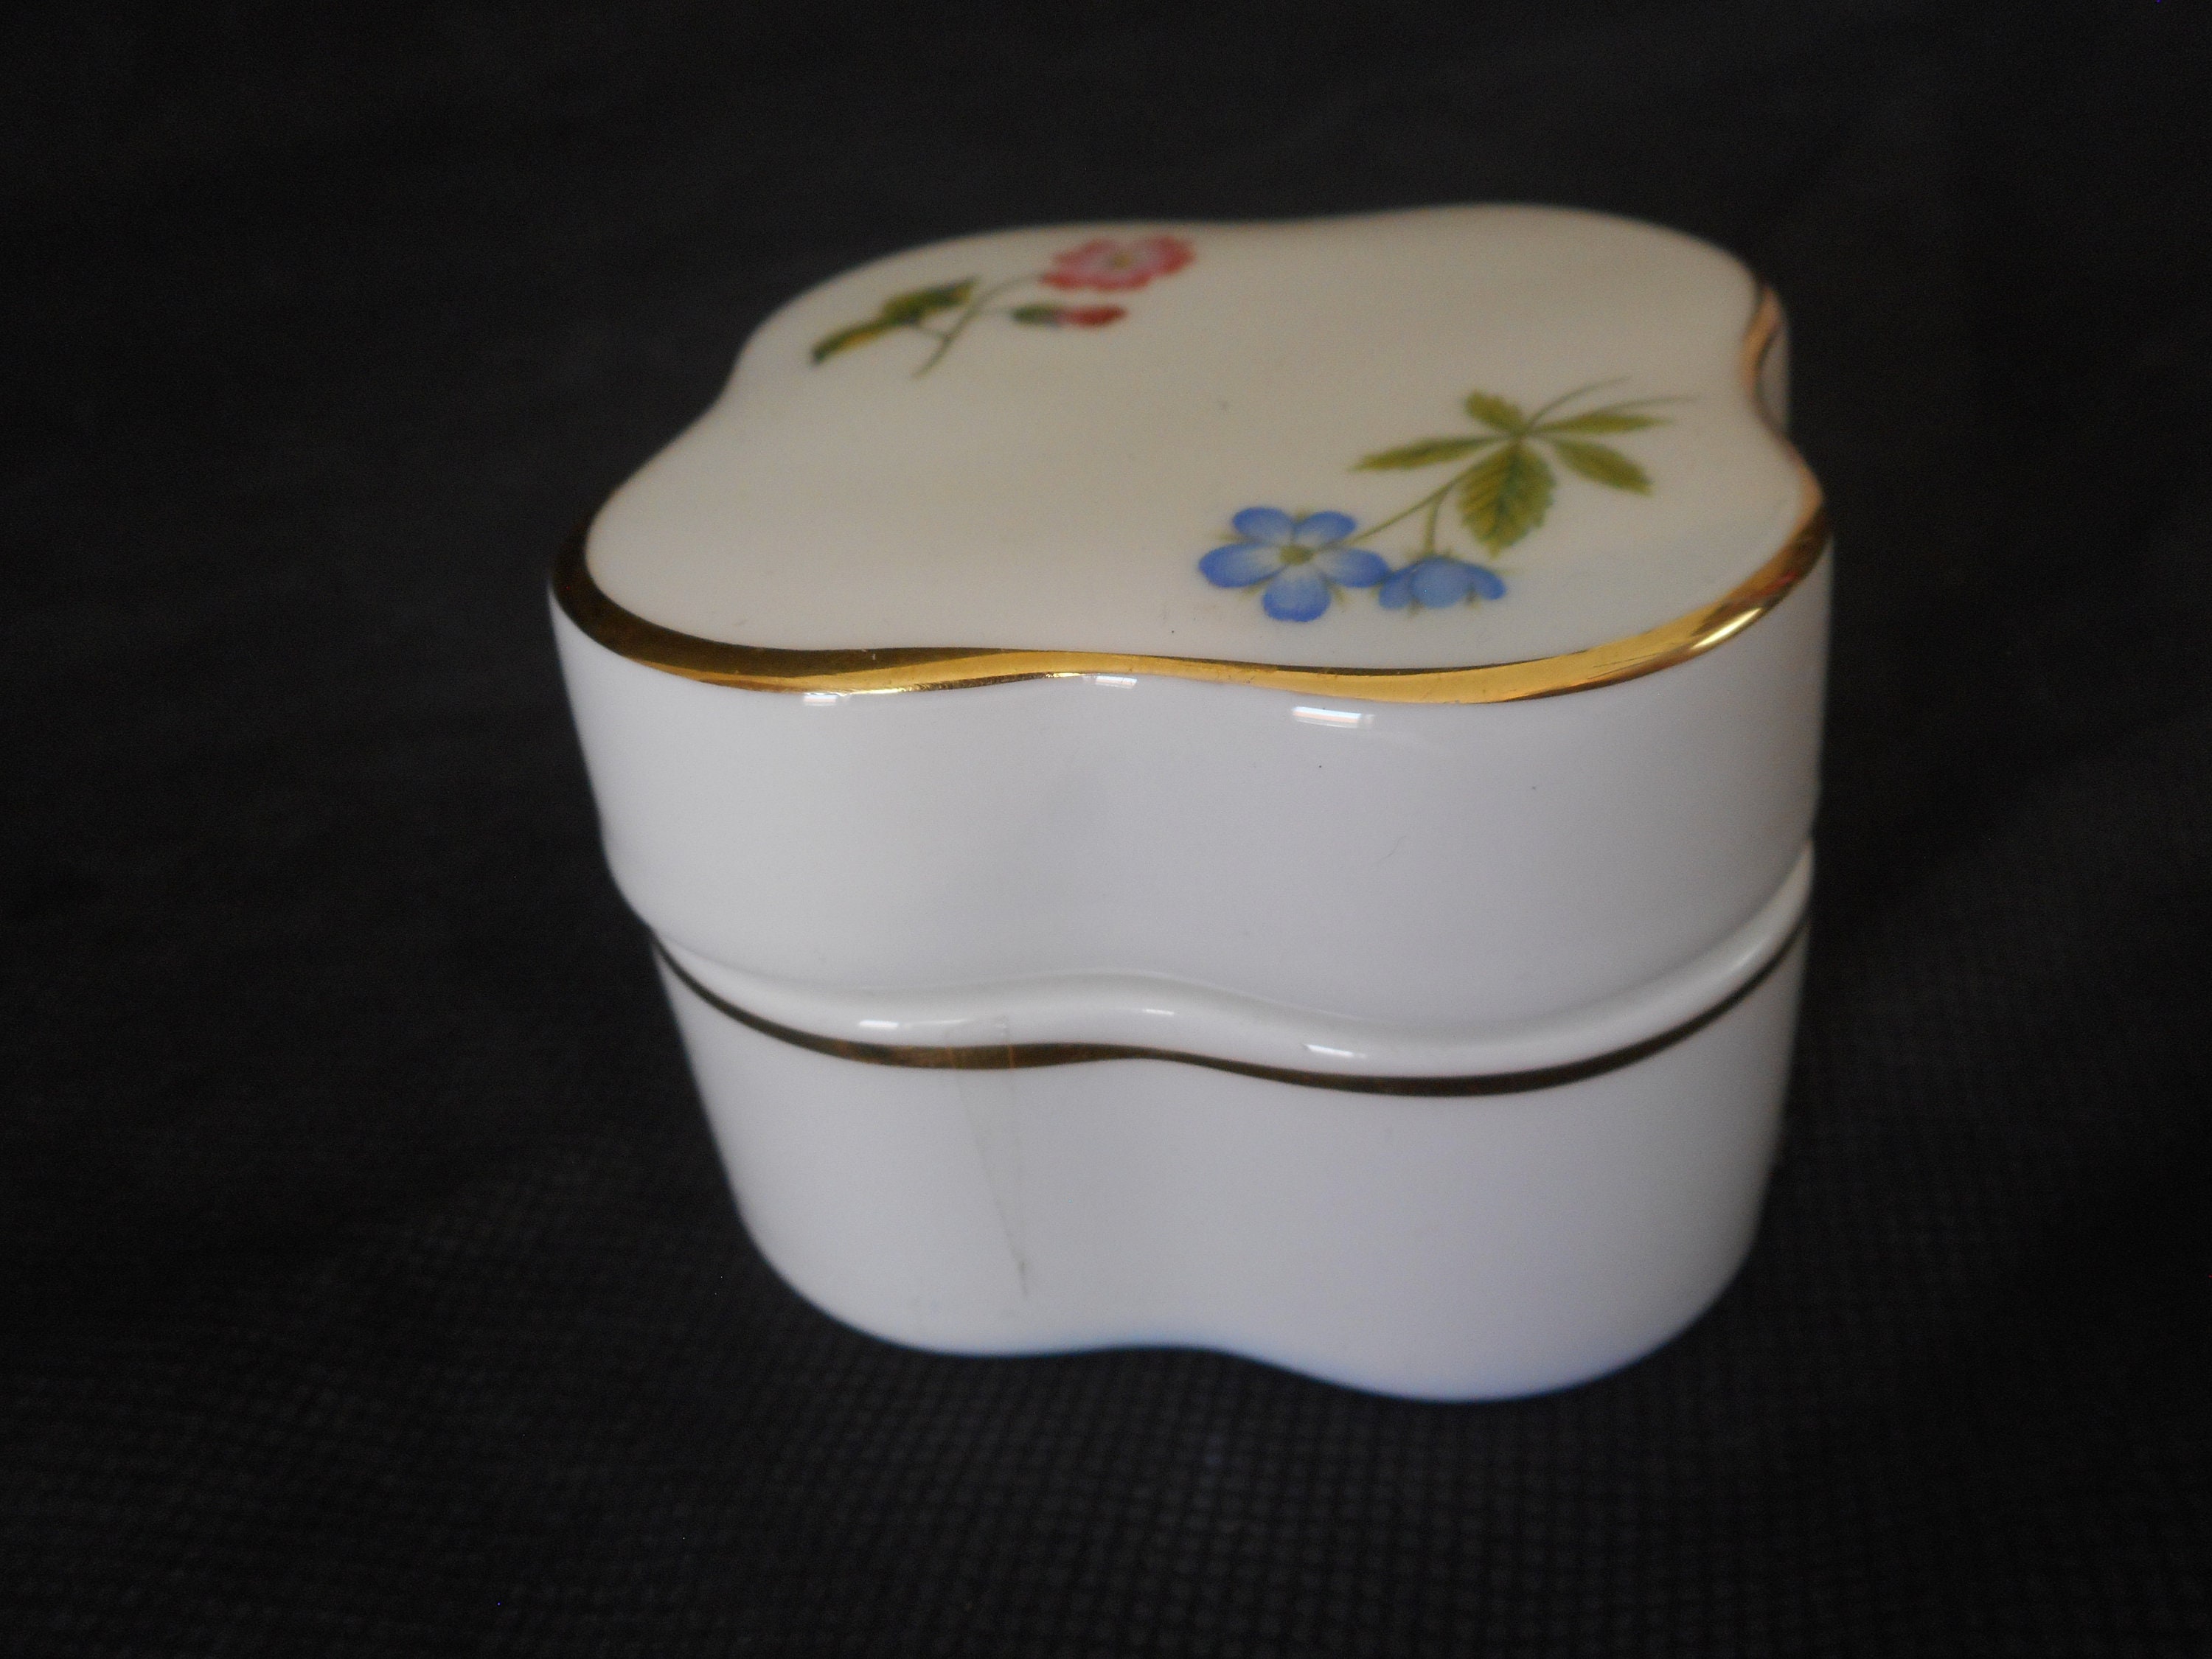 collectable vintage English Royal Kent porcelain lidded trinket box jewellery box